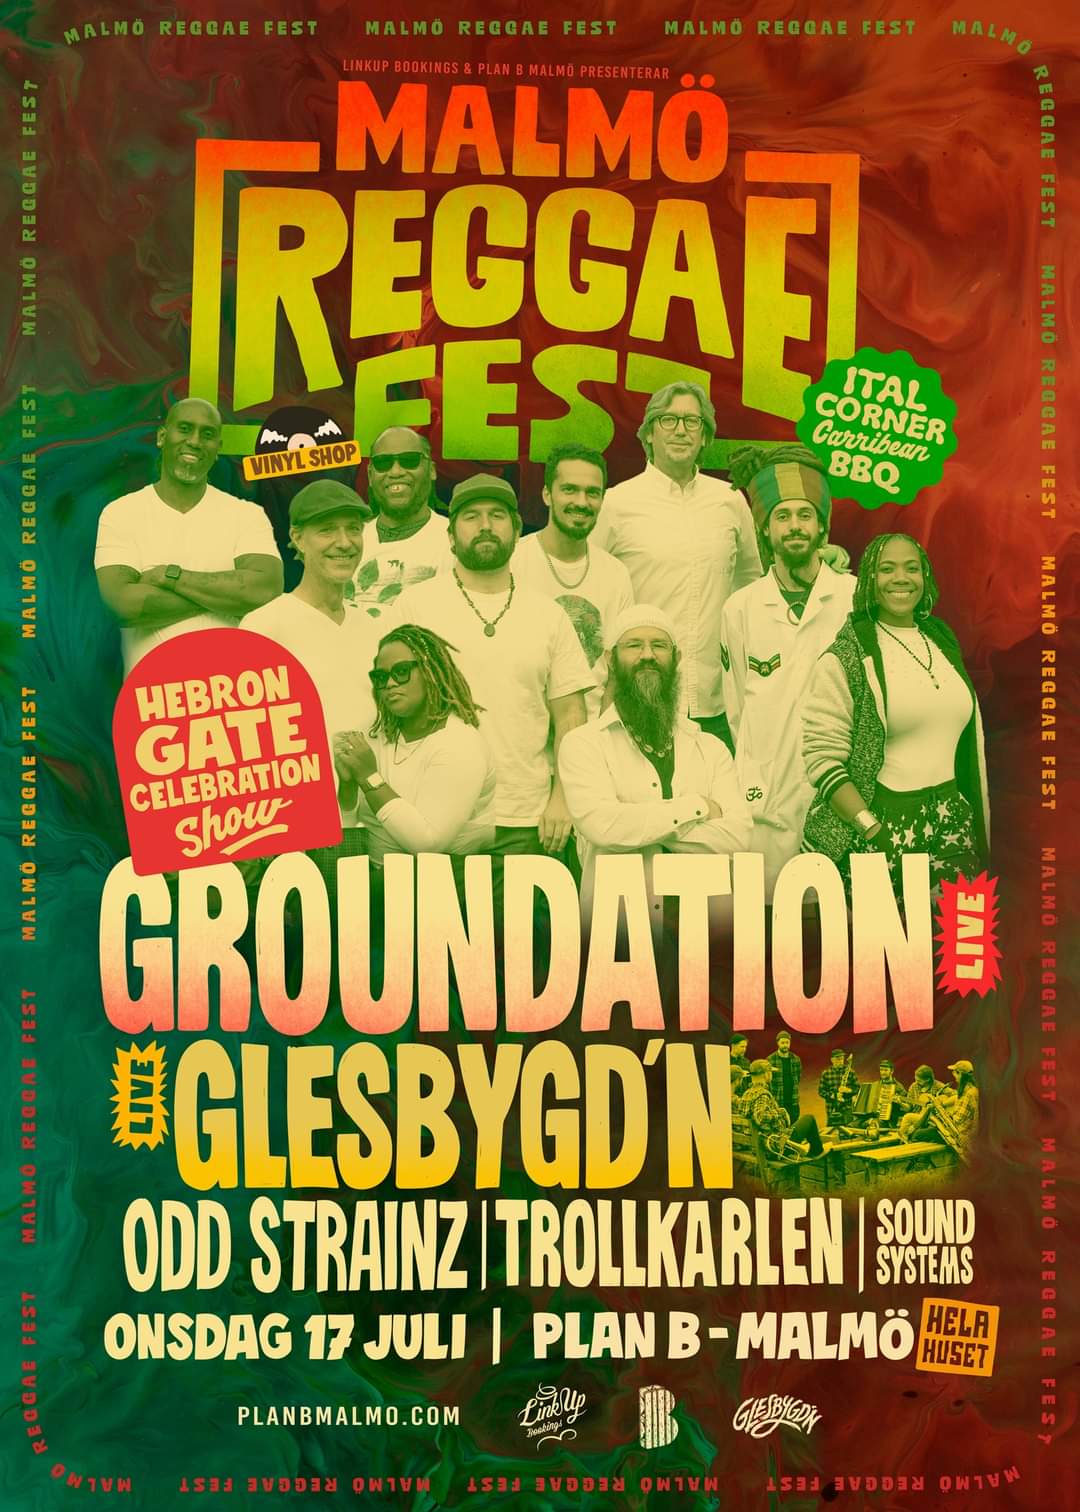 EVENEMANG! Malmö reggae fest (MALMÖ)